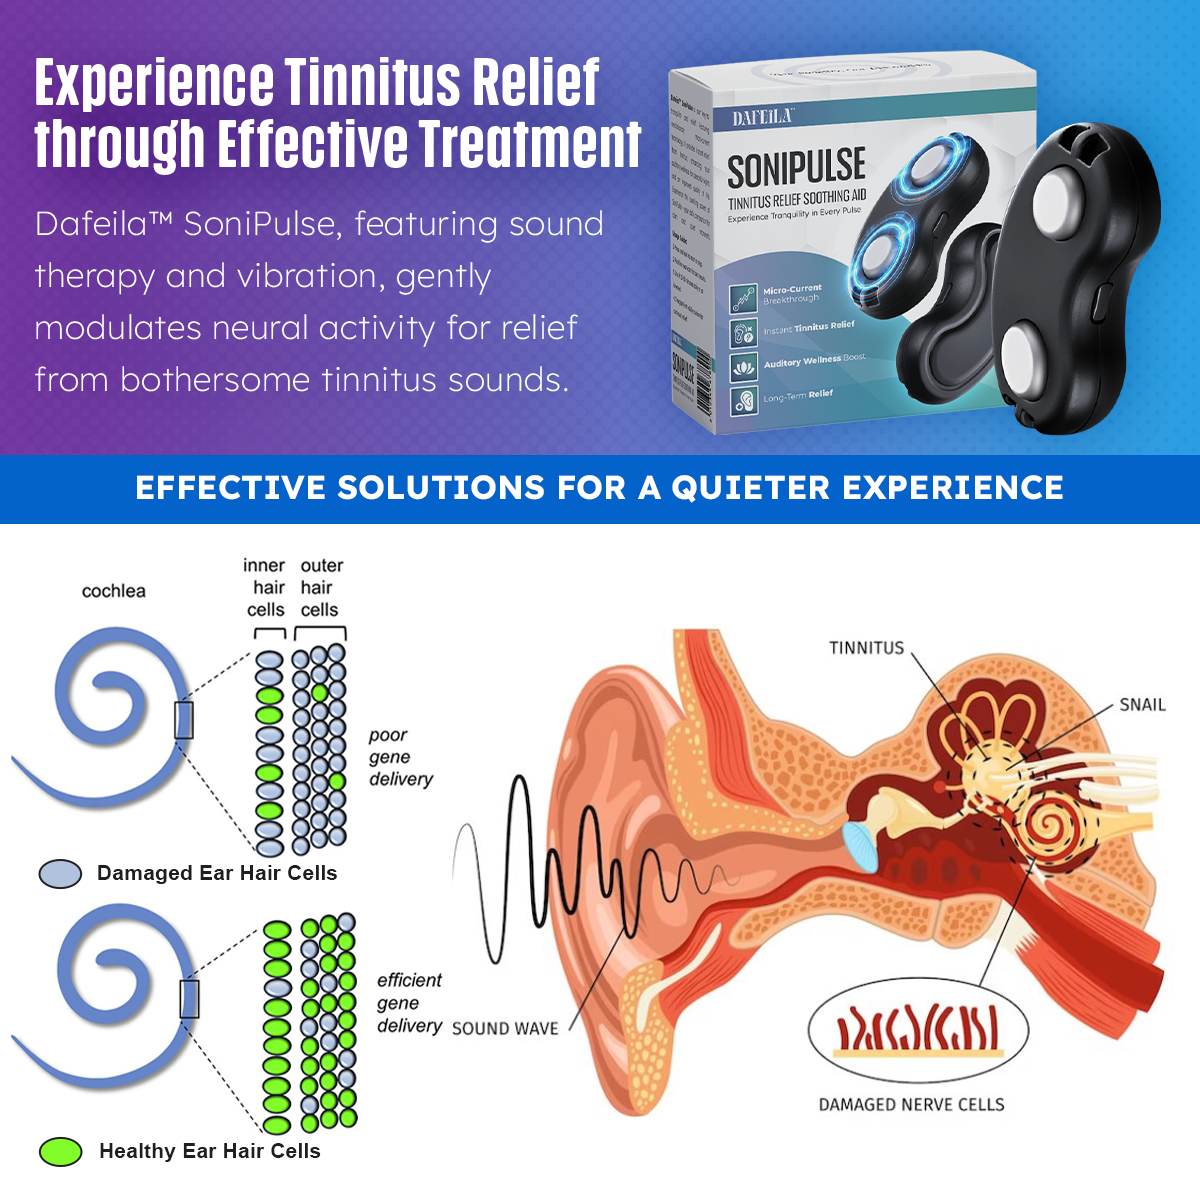 DAFEILA™ SoniPulse Tinnitus Relief Soothing Aid 🔥